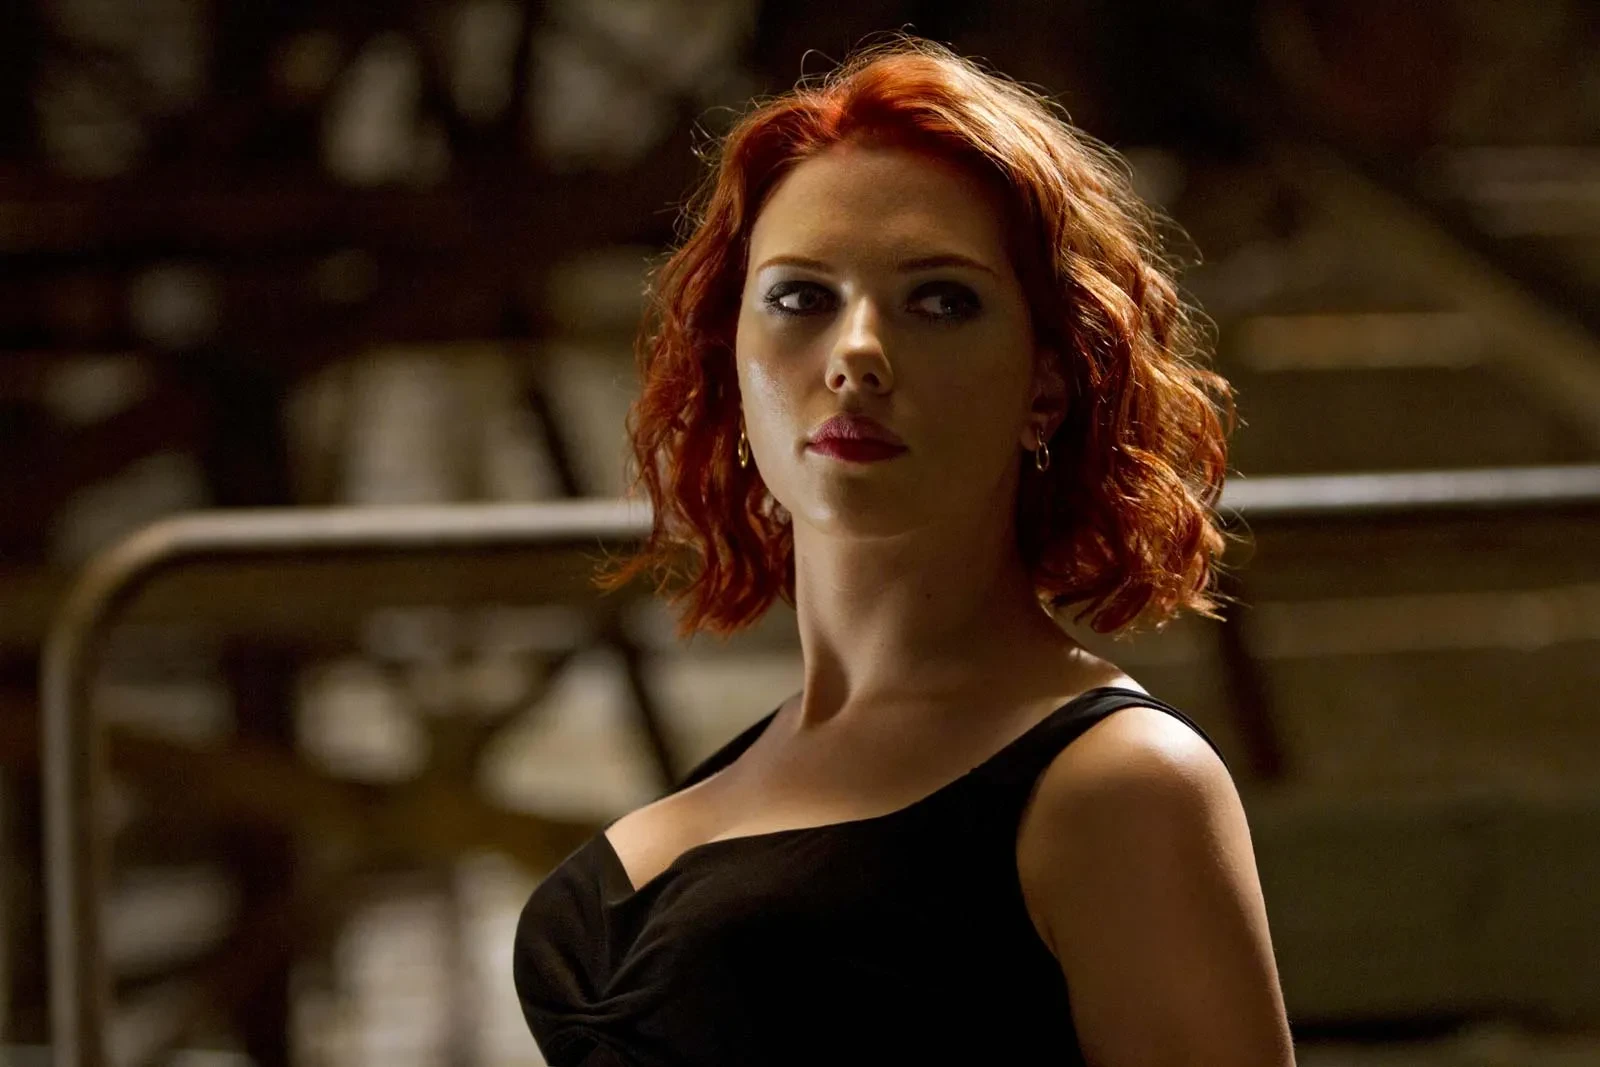 The Black Widow actress Scarlett Johansson's weird fetish involves cars